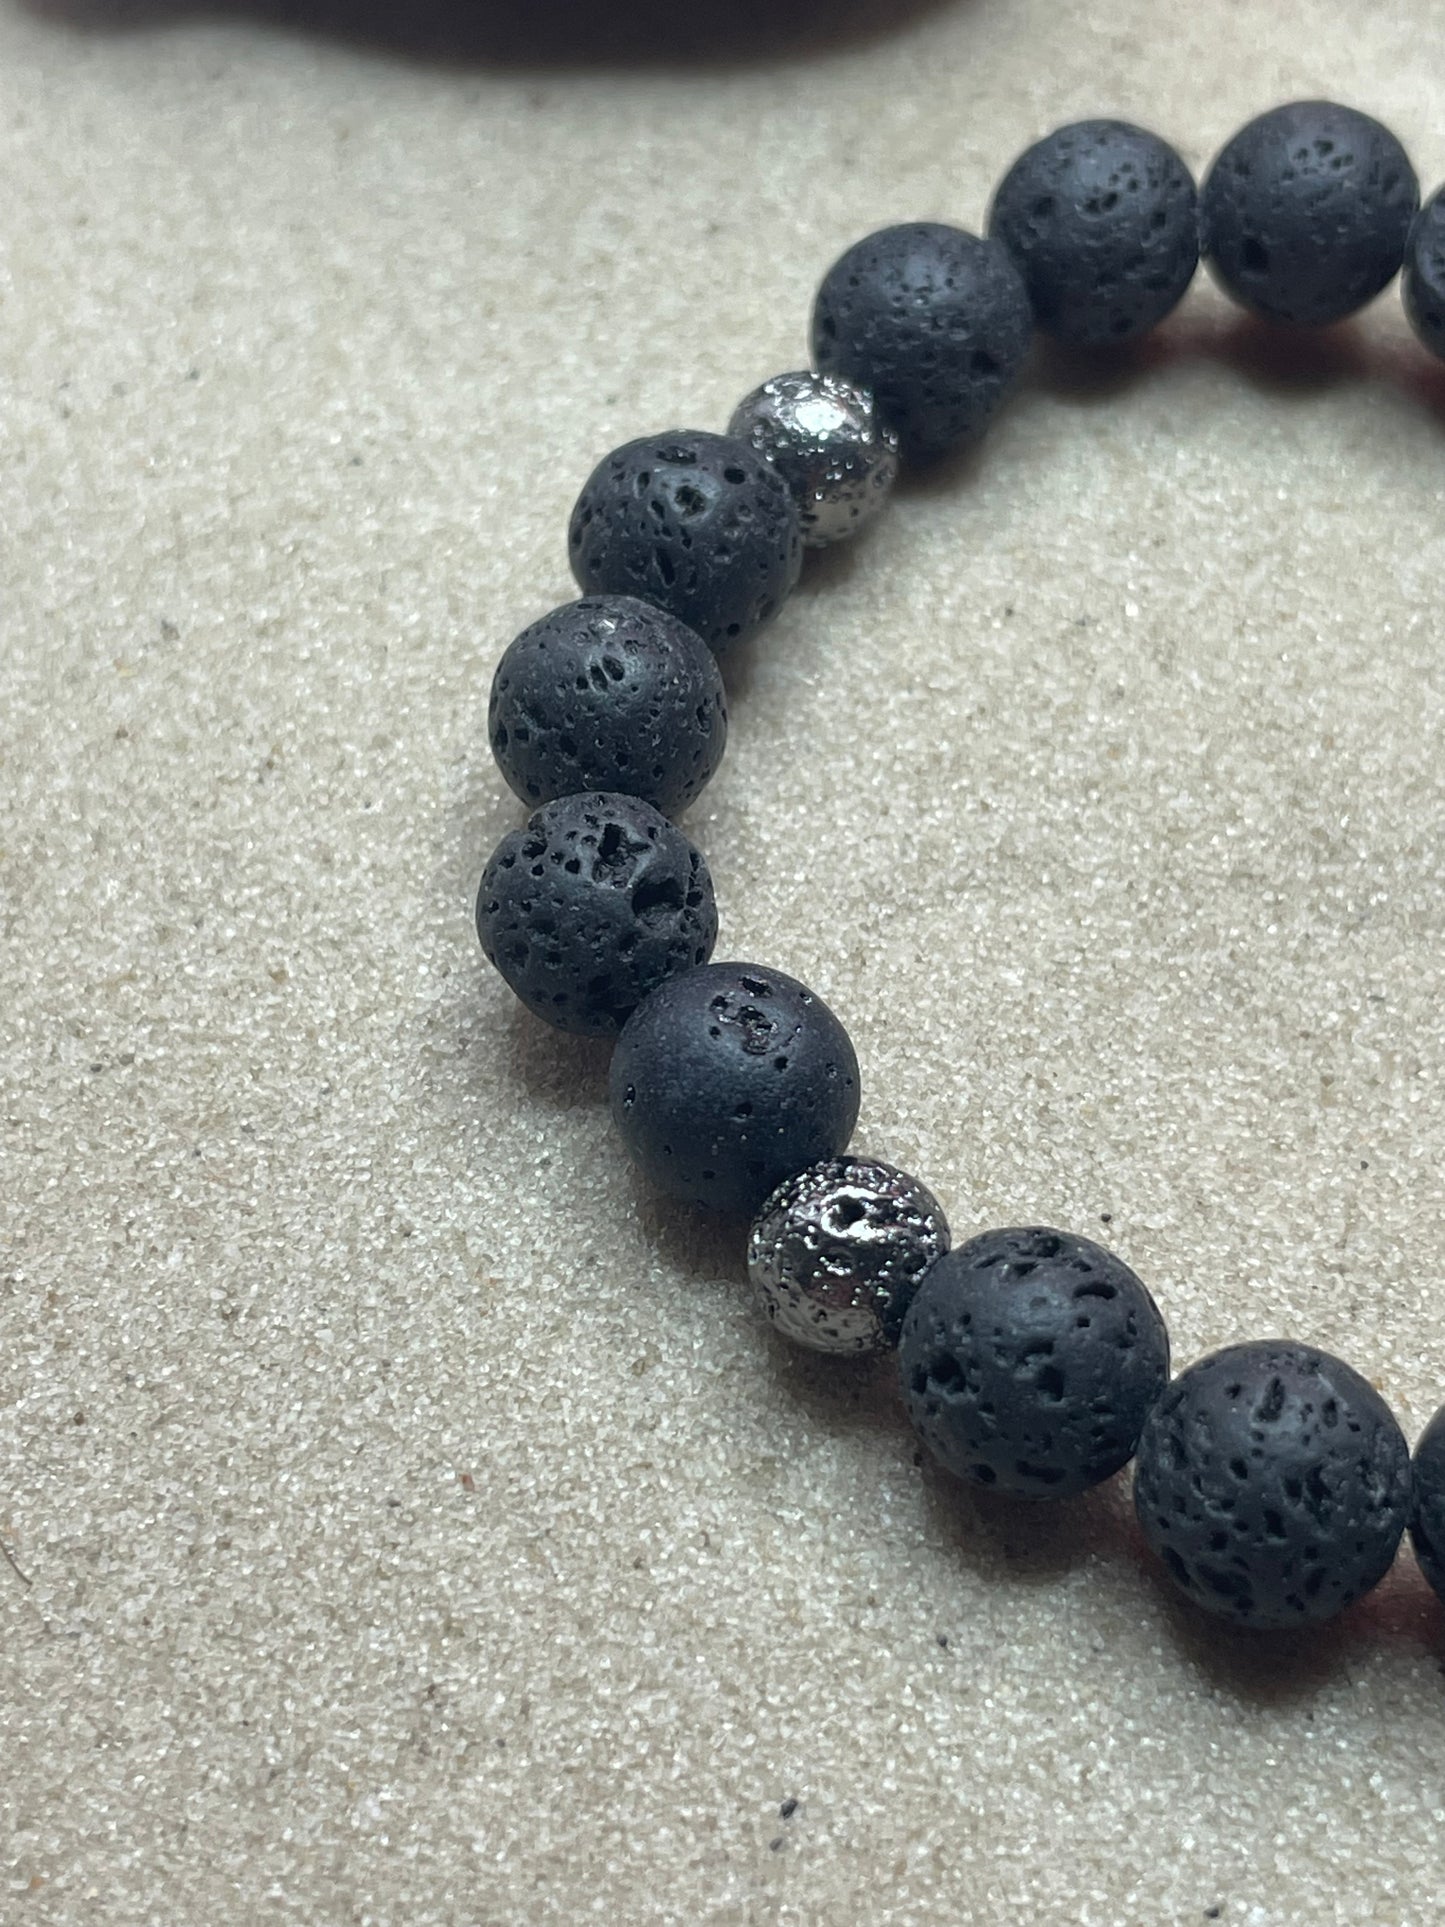 Black Lava Stone Oil Diffuser Bracelet - Reduce Anxiety